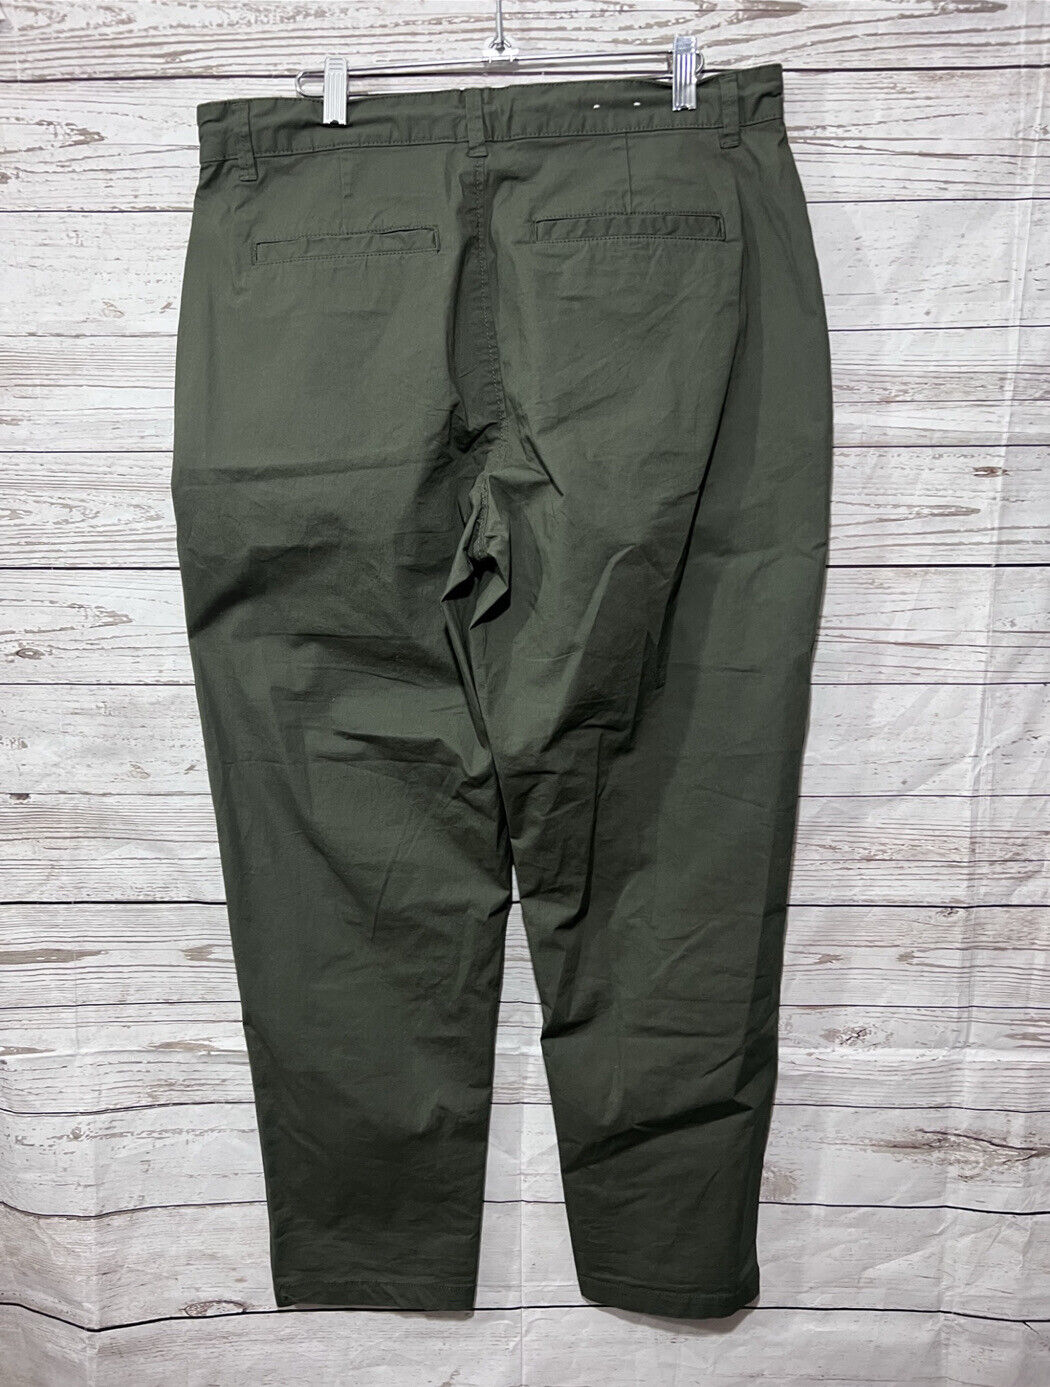 Zara Cargo Pants Olive Green Woman Trousers USA Size 4 Waist 